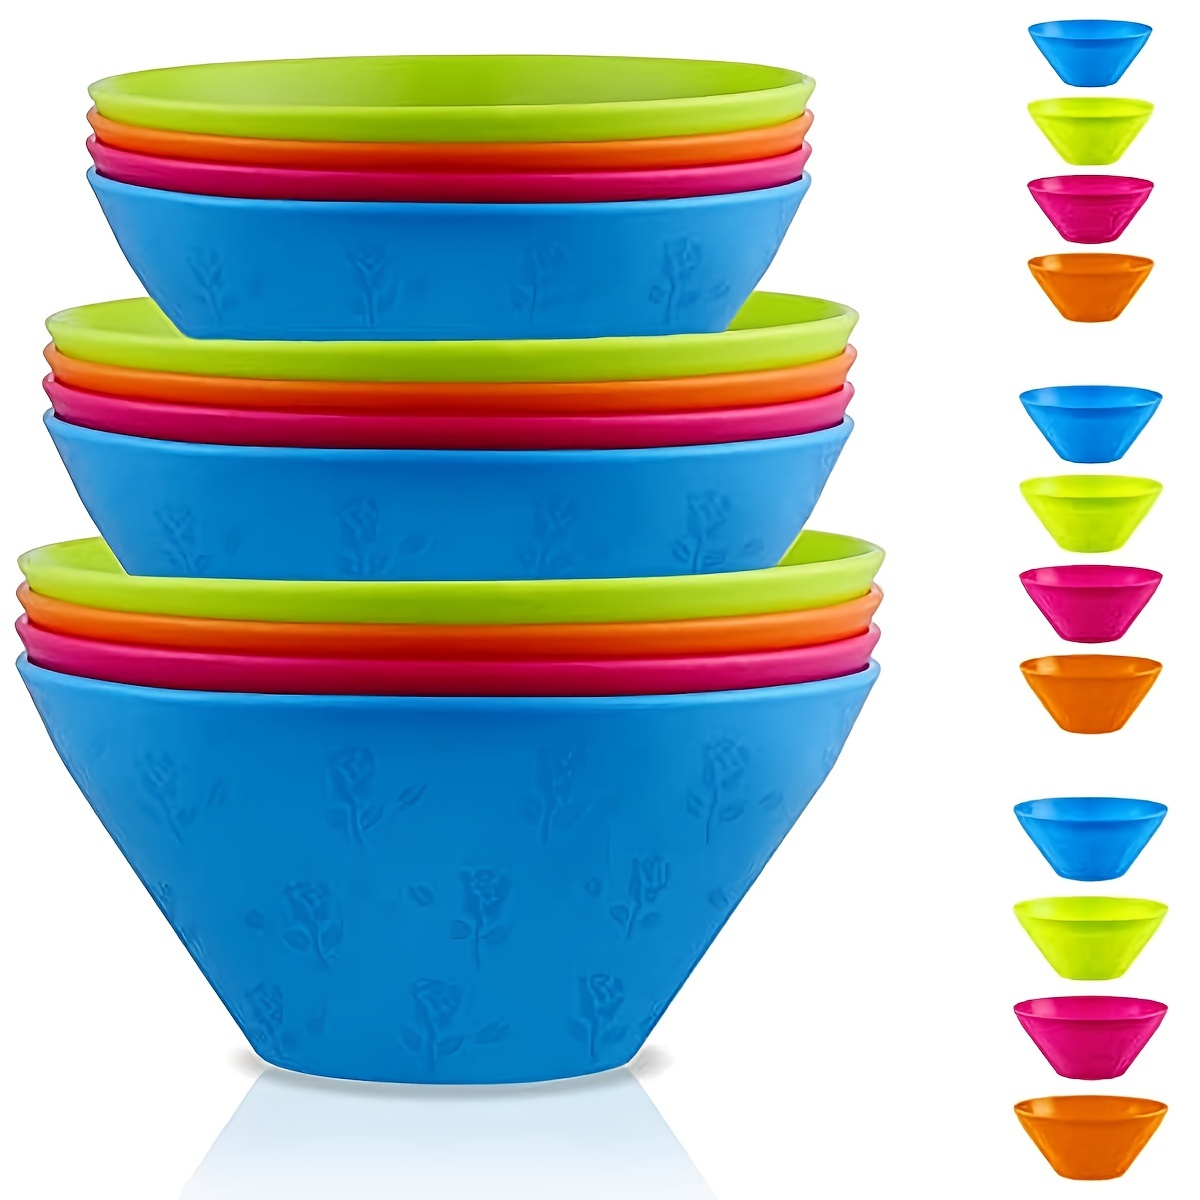 

12pcs Plastic Bowls Set, 3 Sizes 14/20/25oz Unbreakable Reusable Light Weight Bowl For Cereal, Noodle, Soup, Pasta, Ramen, Popcorn, Ice Cream, Fruit, Salad And All Purpose